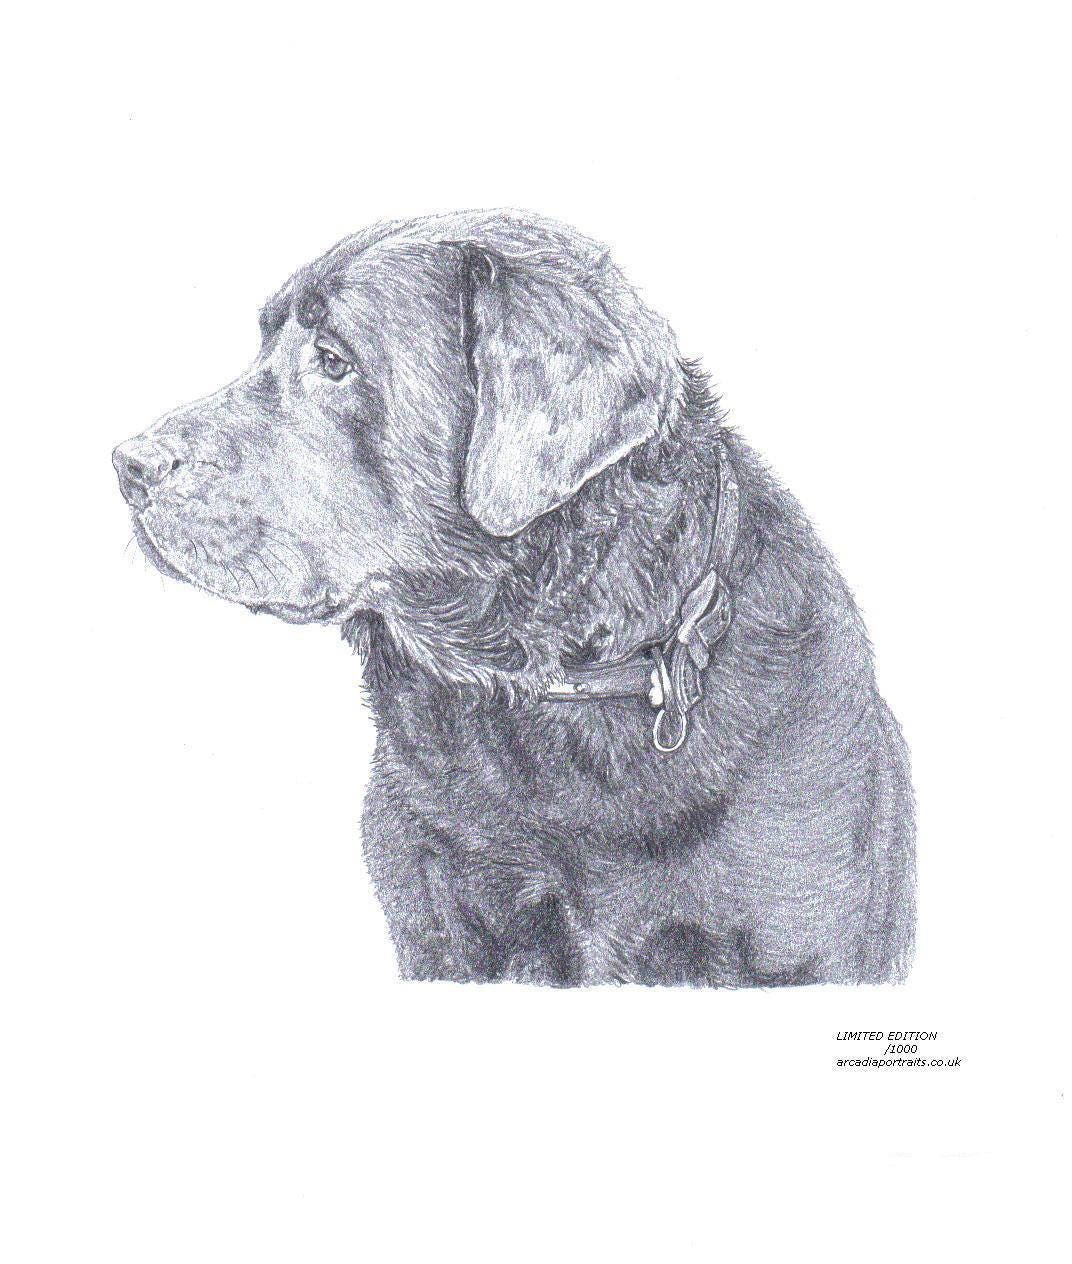 CHOCOLATE LABRADOR 1 dog Limited Edition art drawing print | Etsy